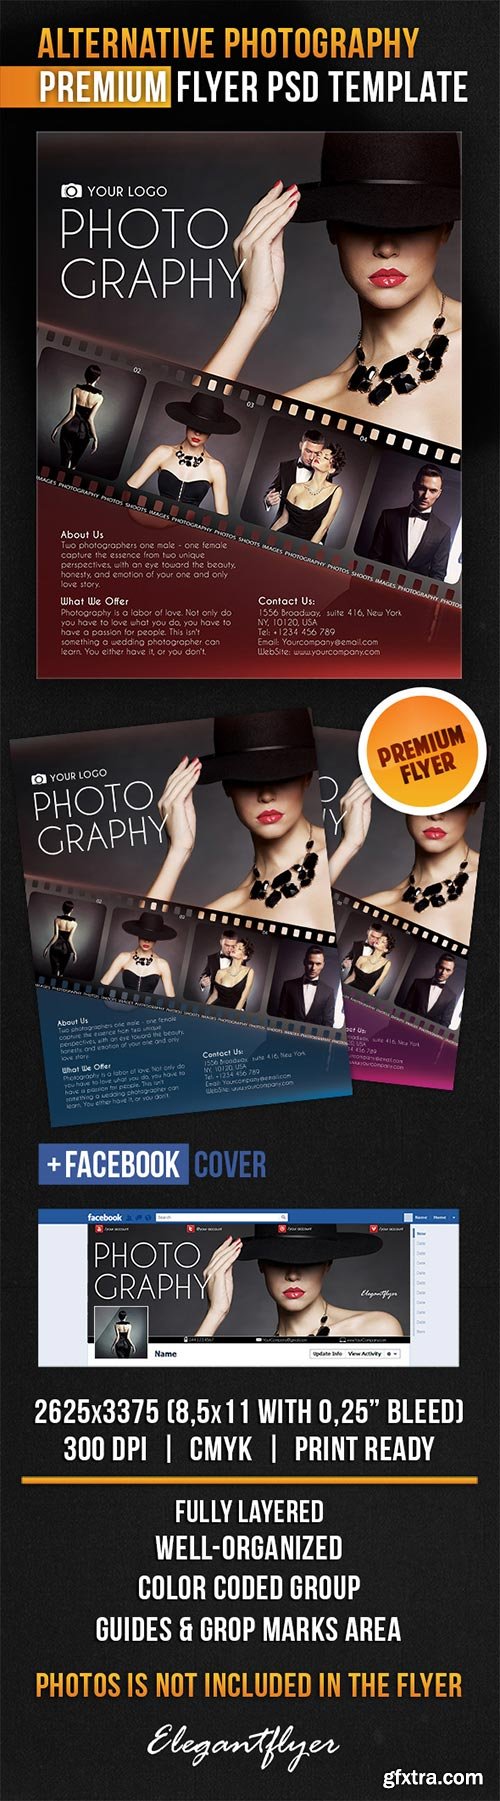 Alternative Photography Flyer PSD Template + Facebook Cover